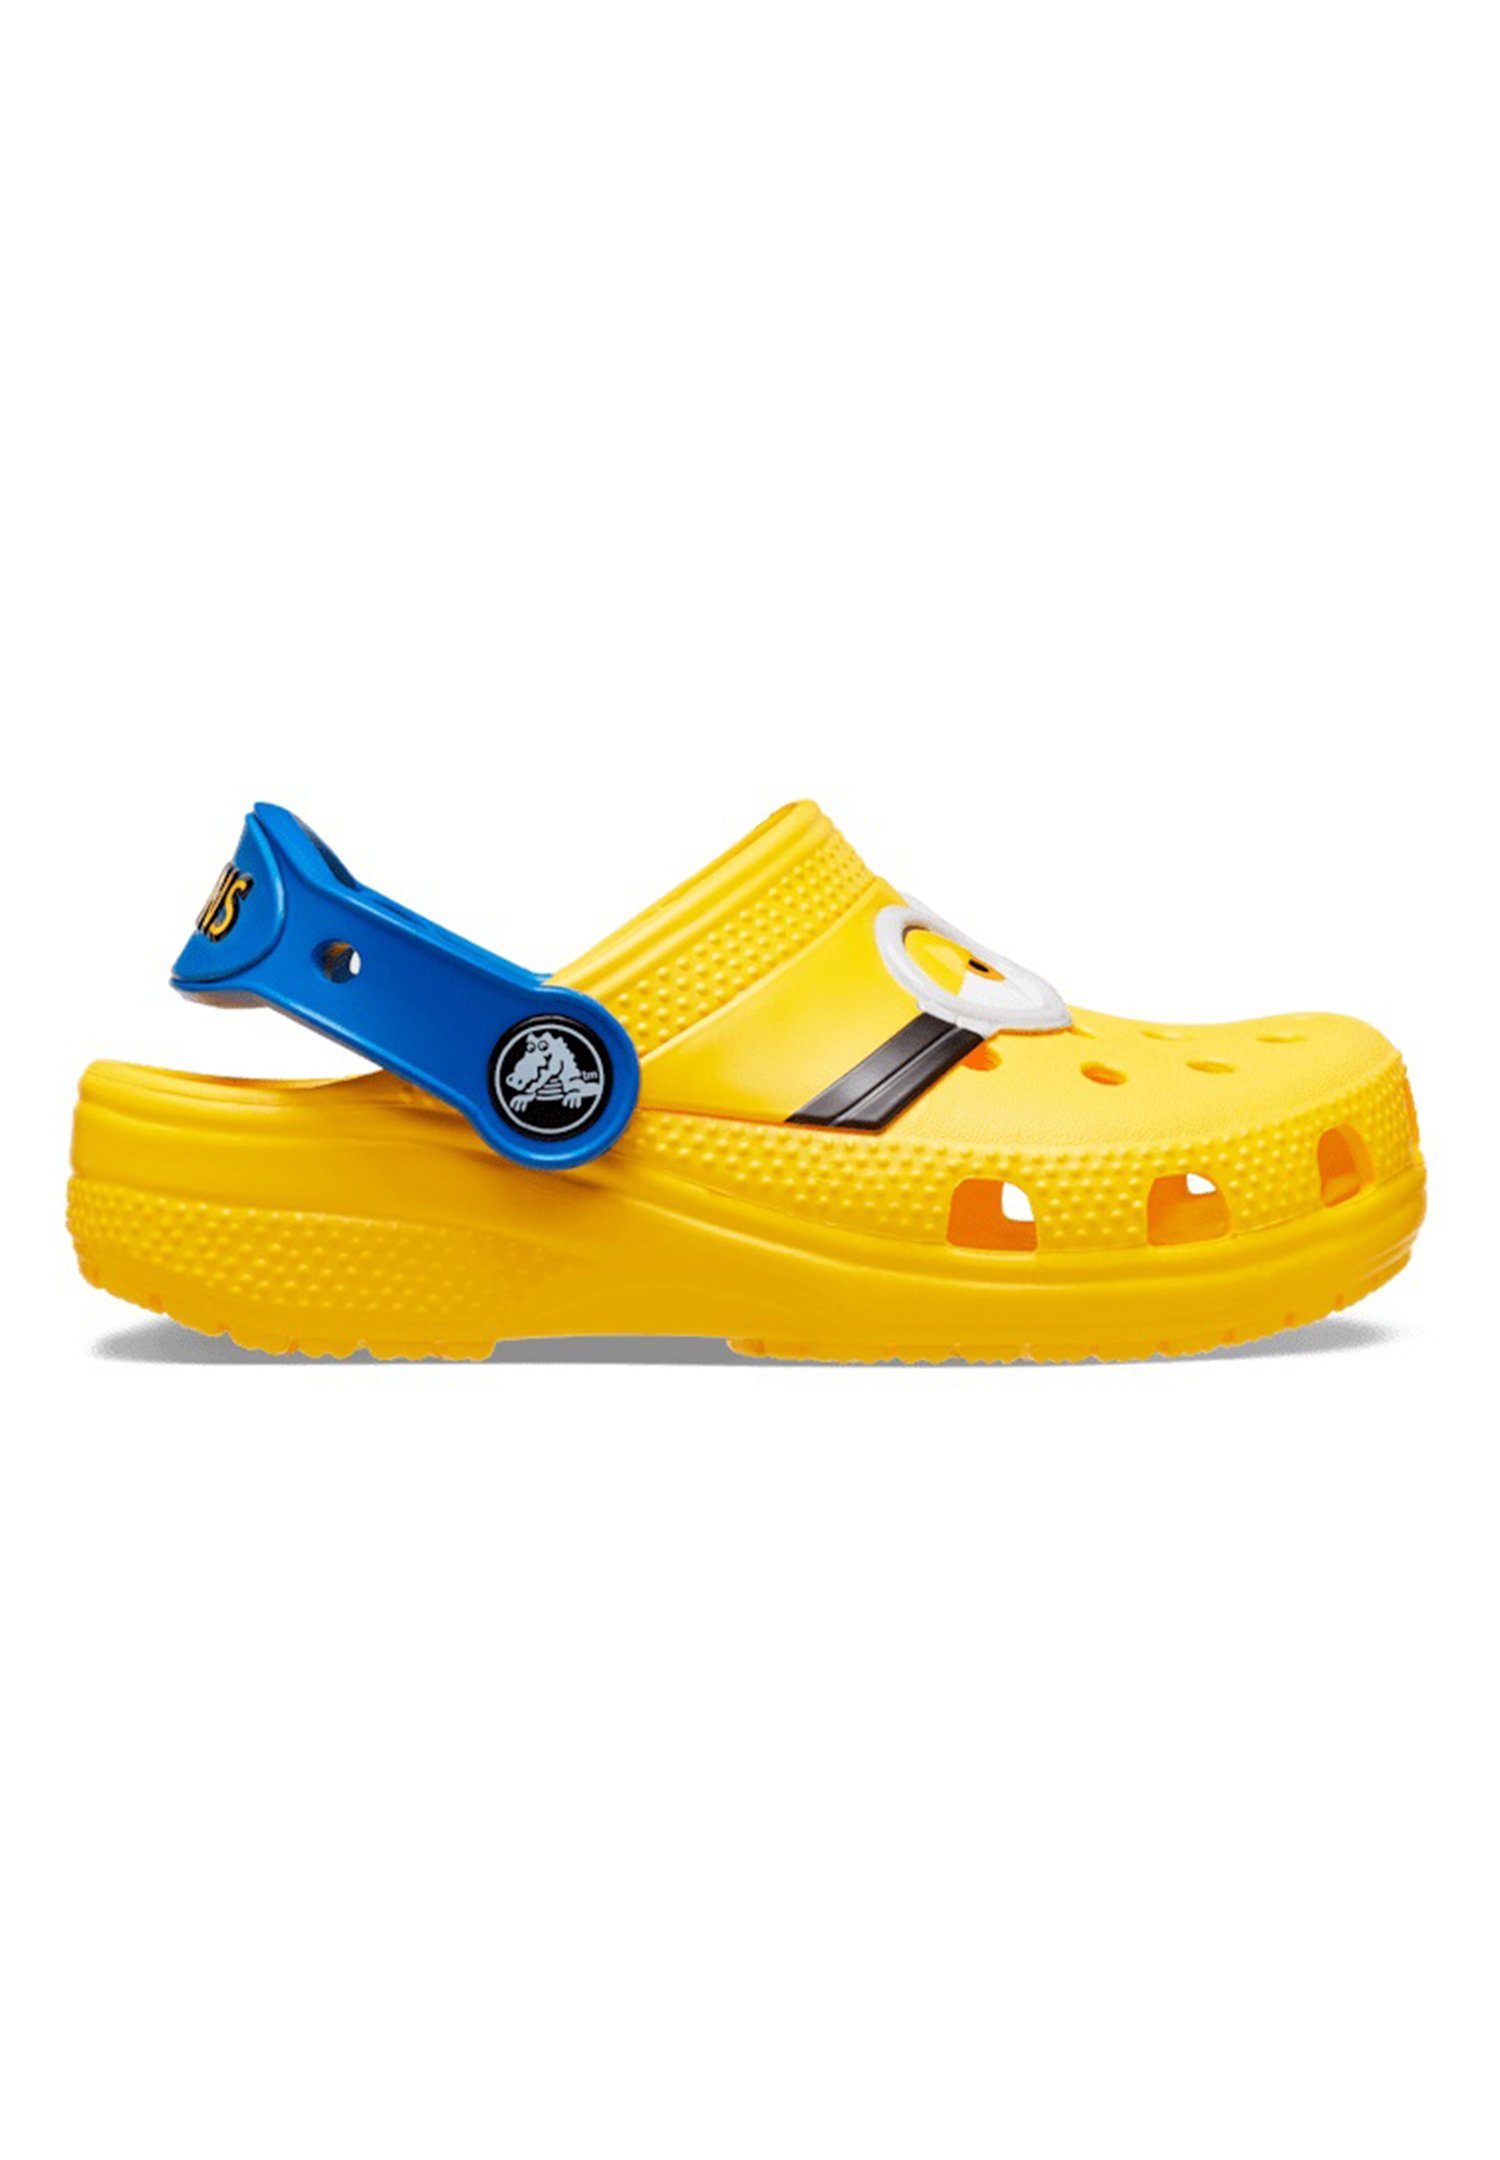 amminions Sneaker Crocs cg Crocs fl k i